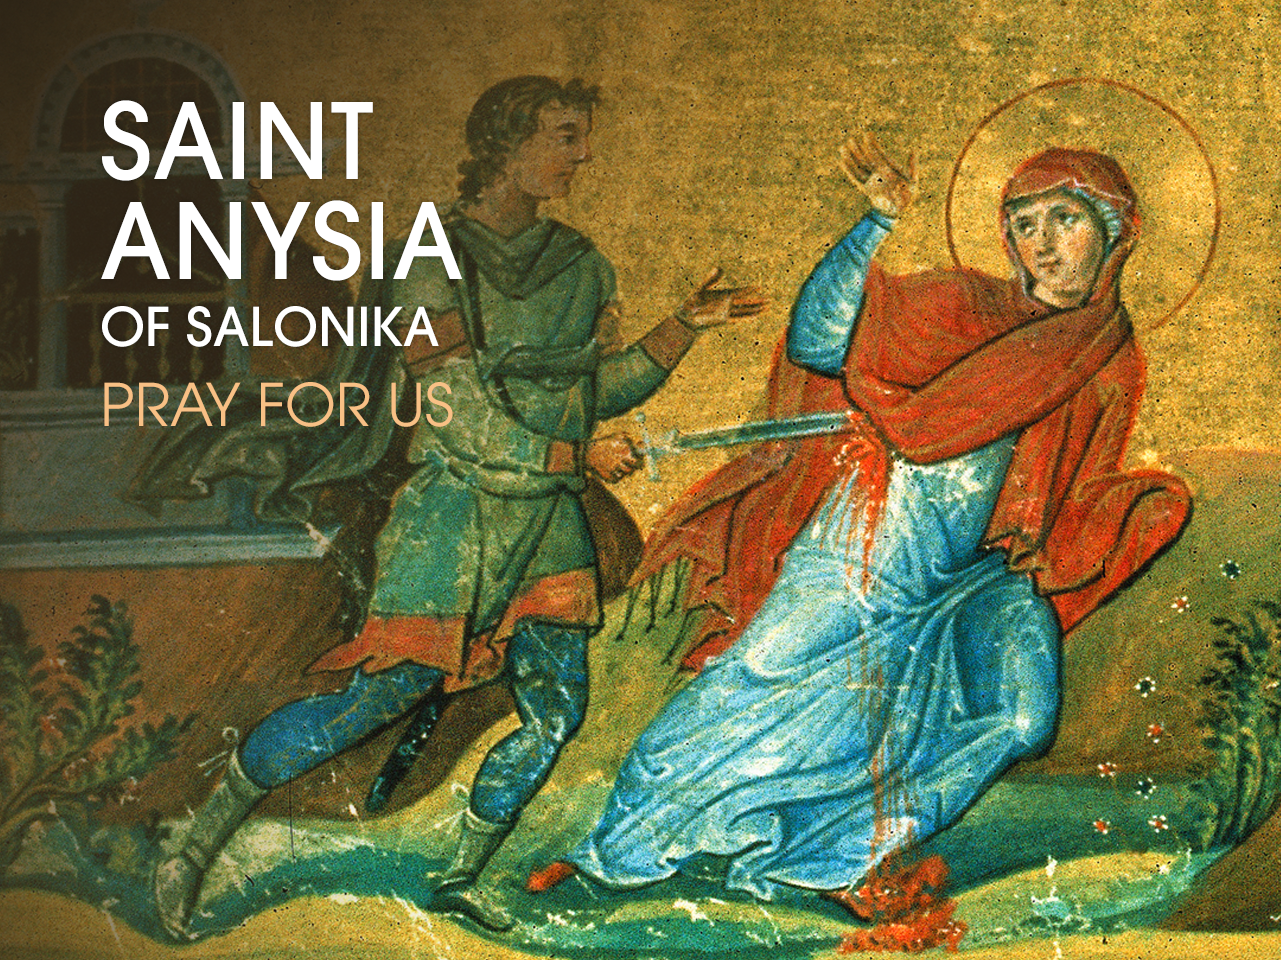 Saint Anysia of Salonika